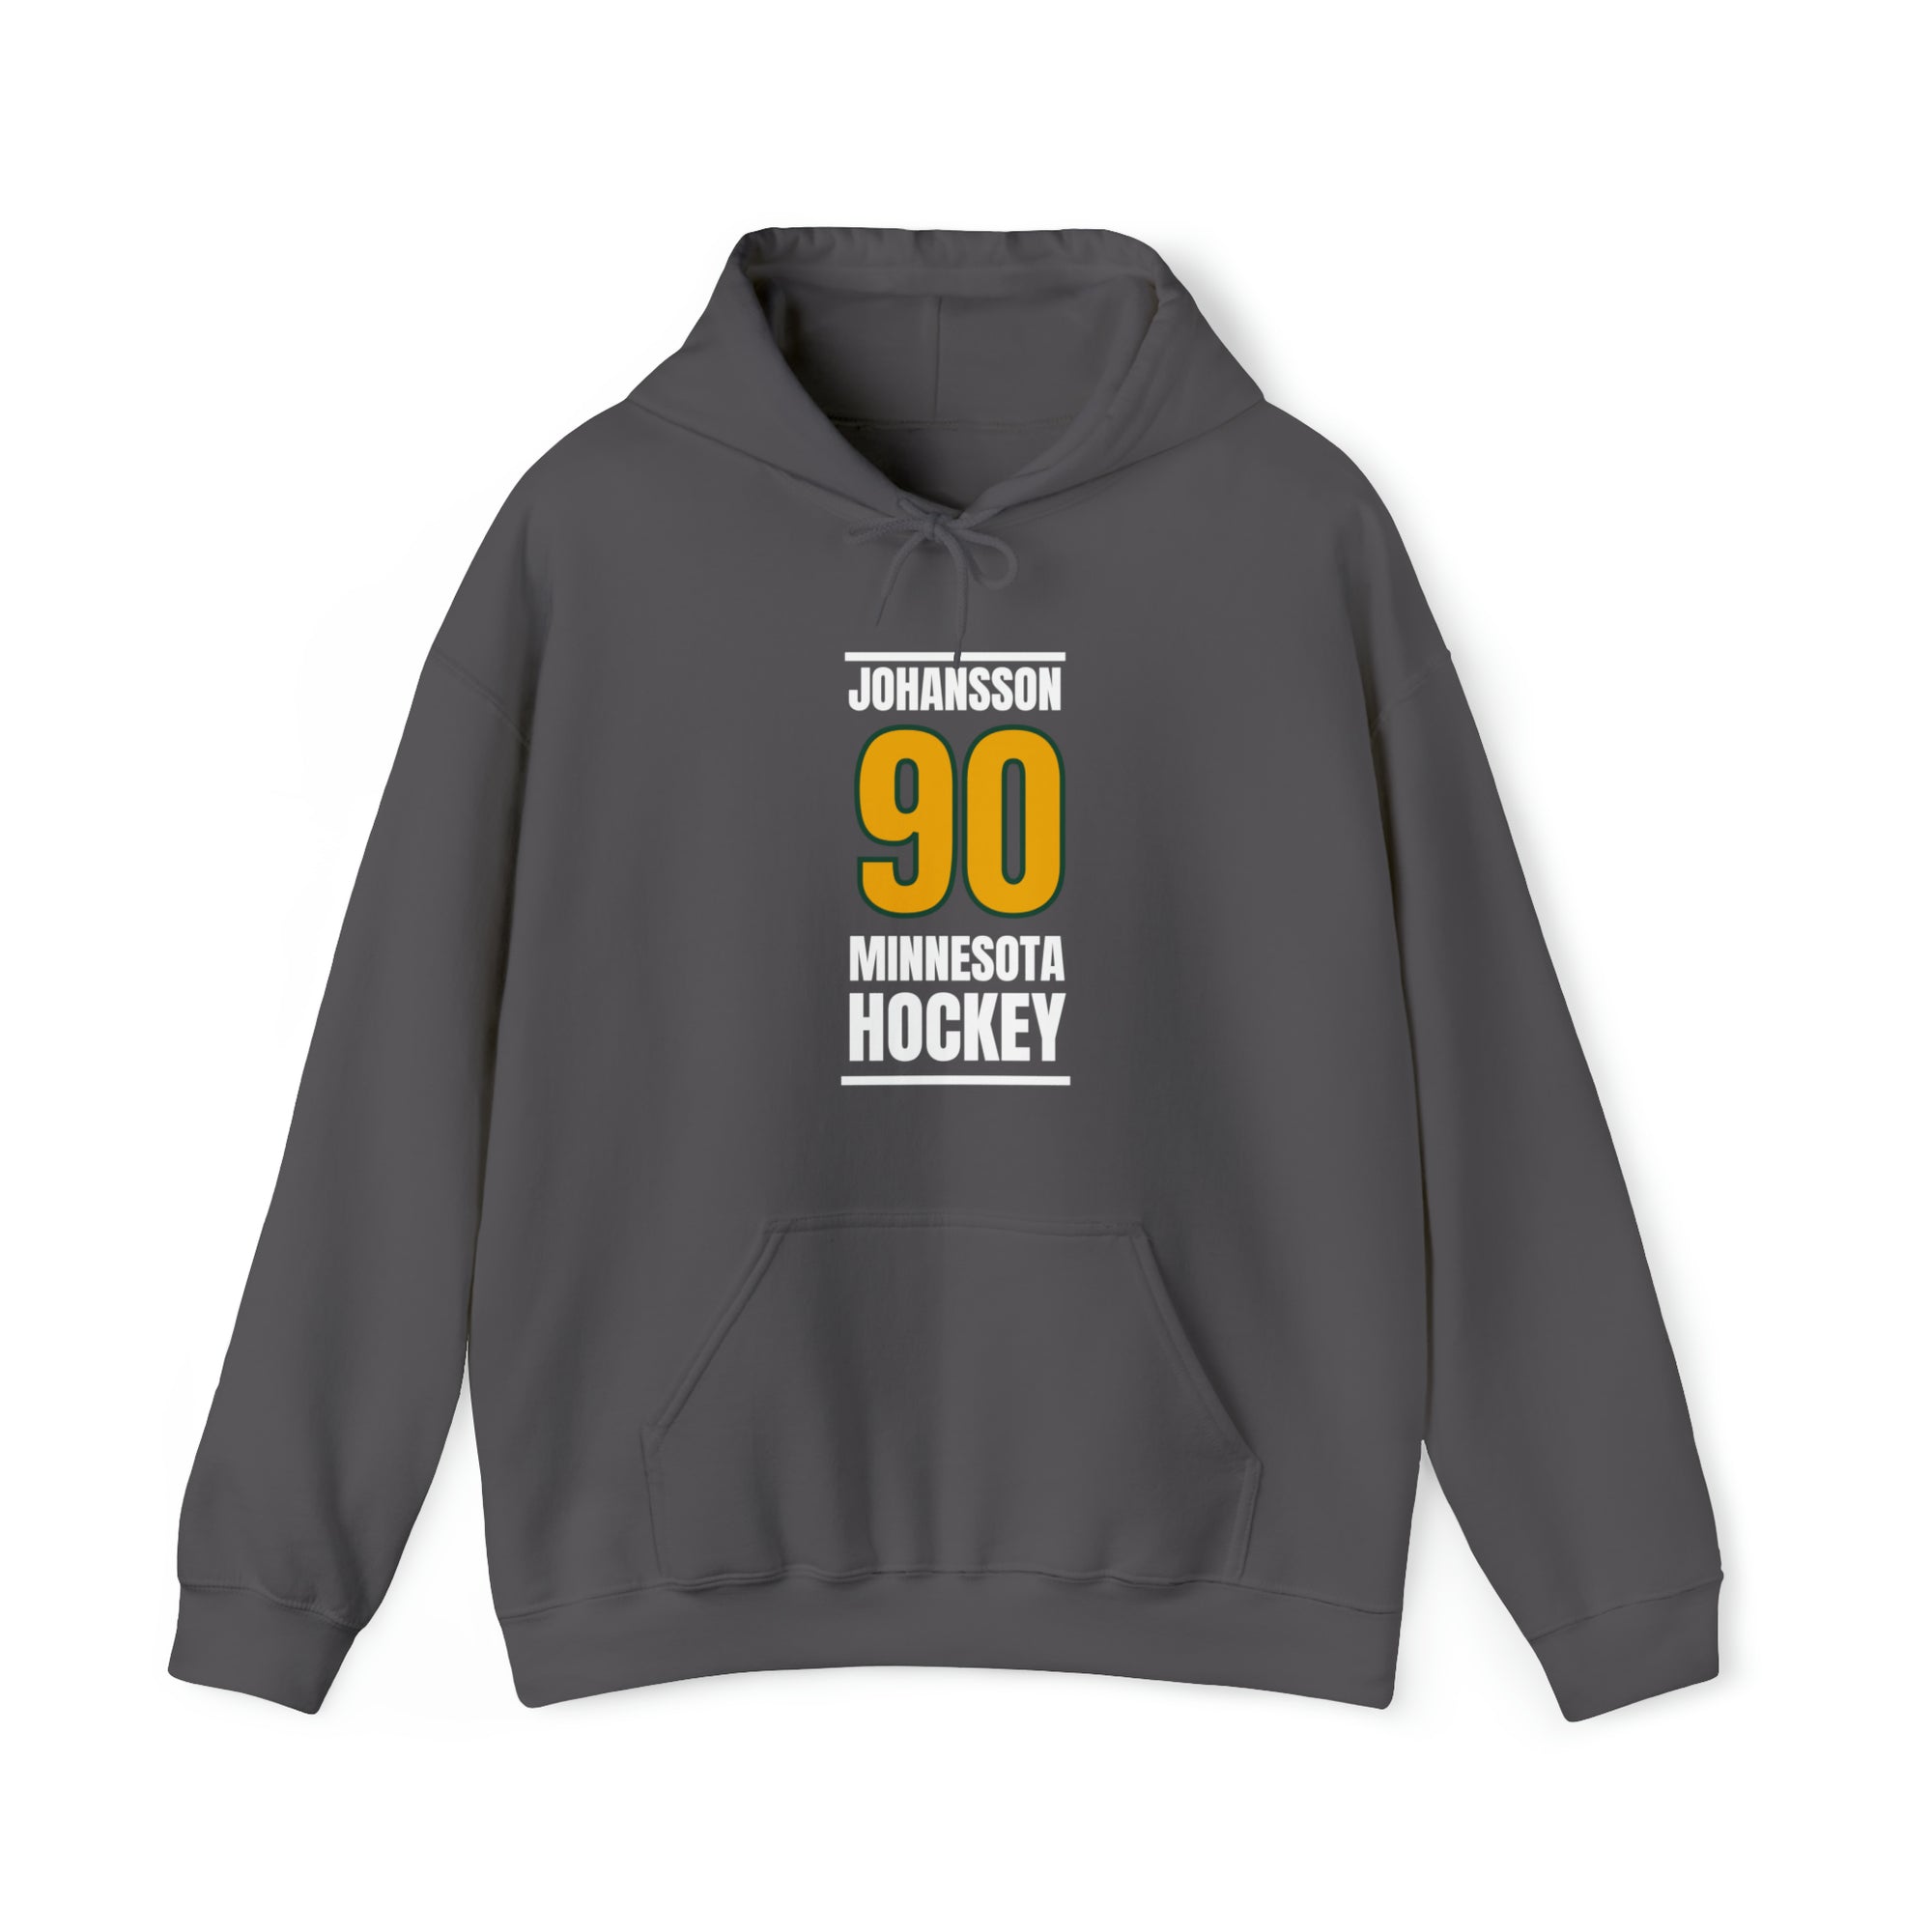 Johnsson 90 Minnesota Hockey Gold Vertical Design Unisex Hooded Sweatshirt